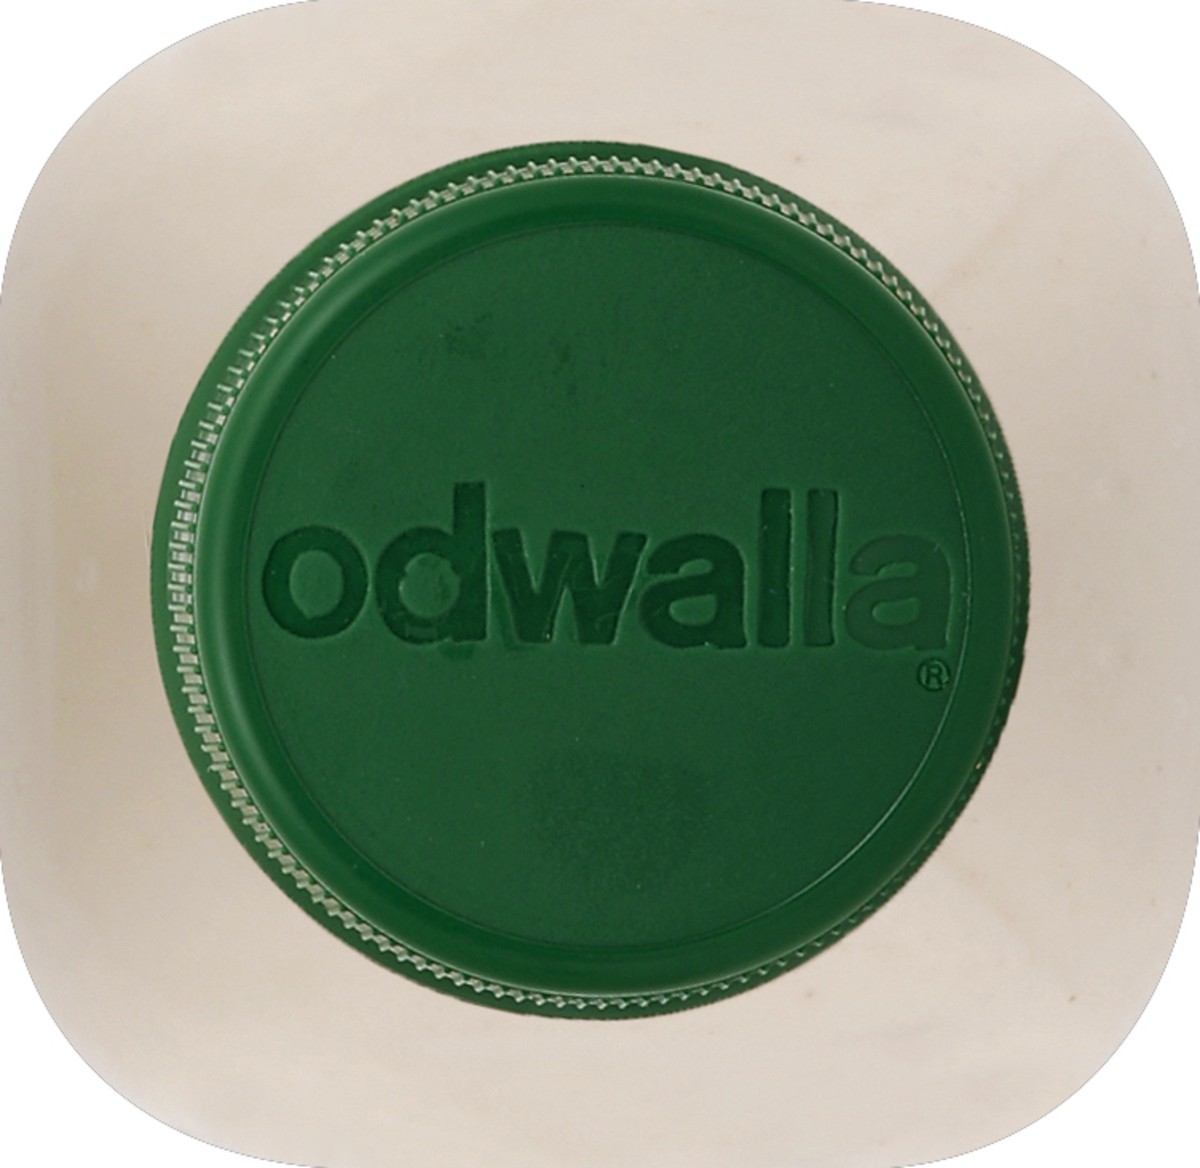 slide 2 of 4, Odwalla Almondmilk Shake 15.2 oz, 15.2 fl oz